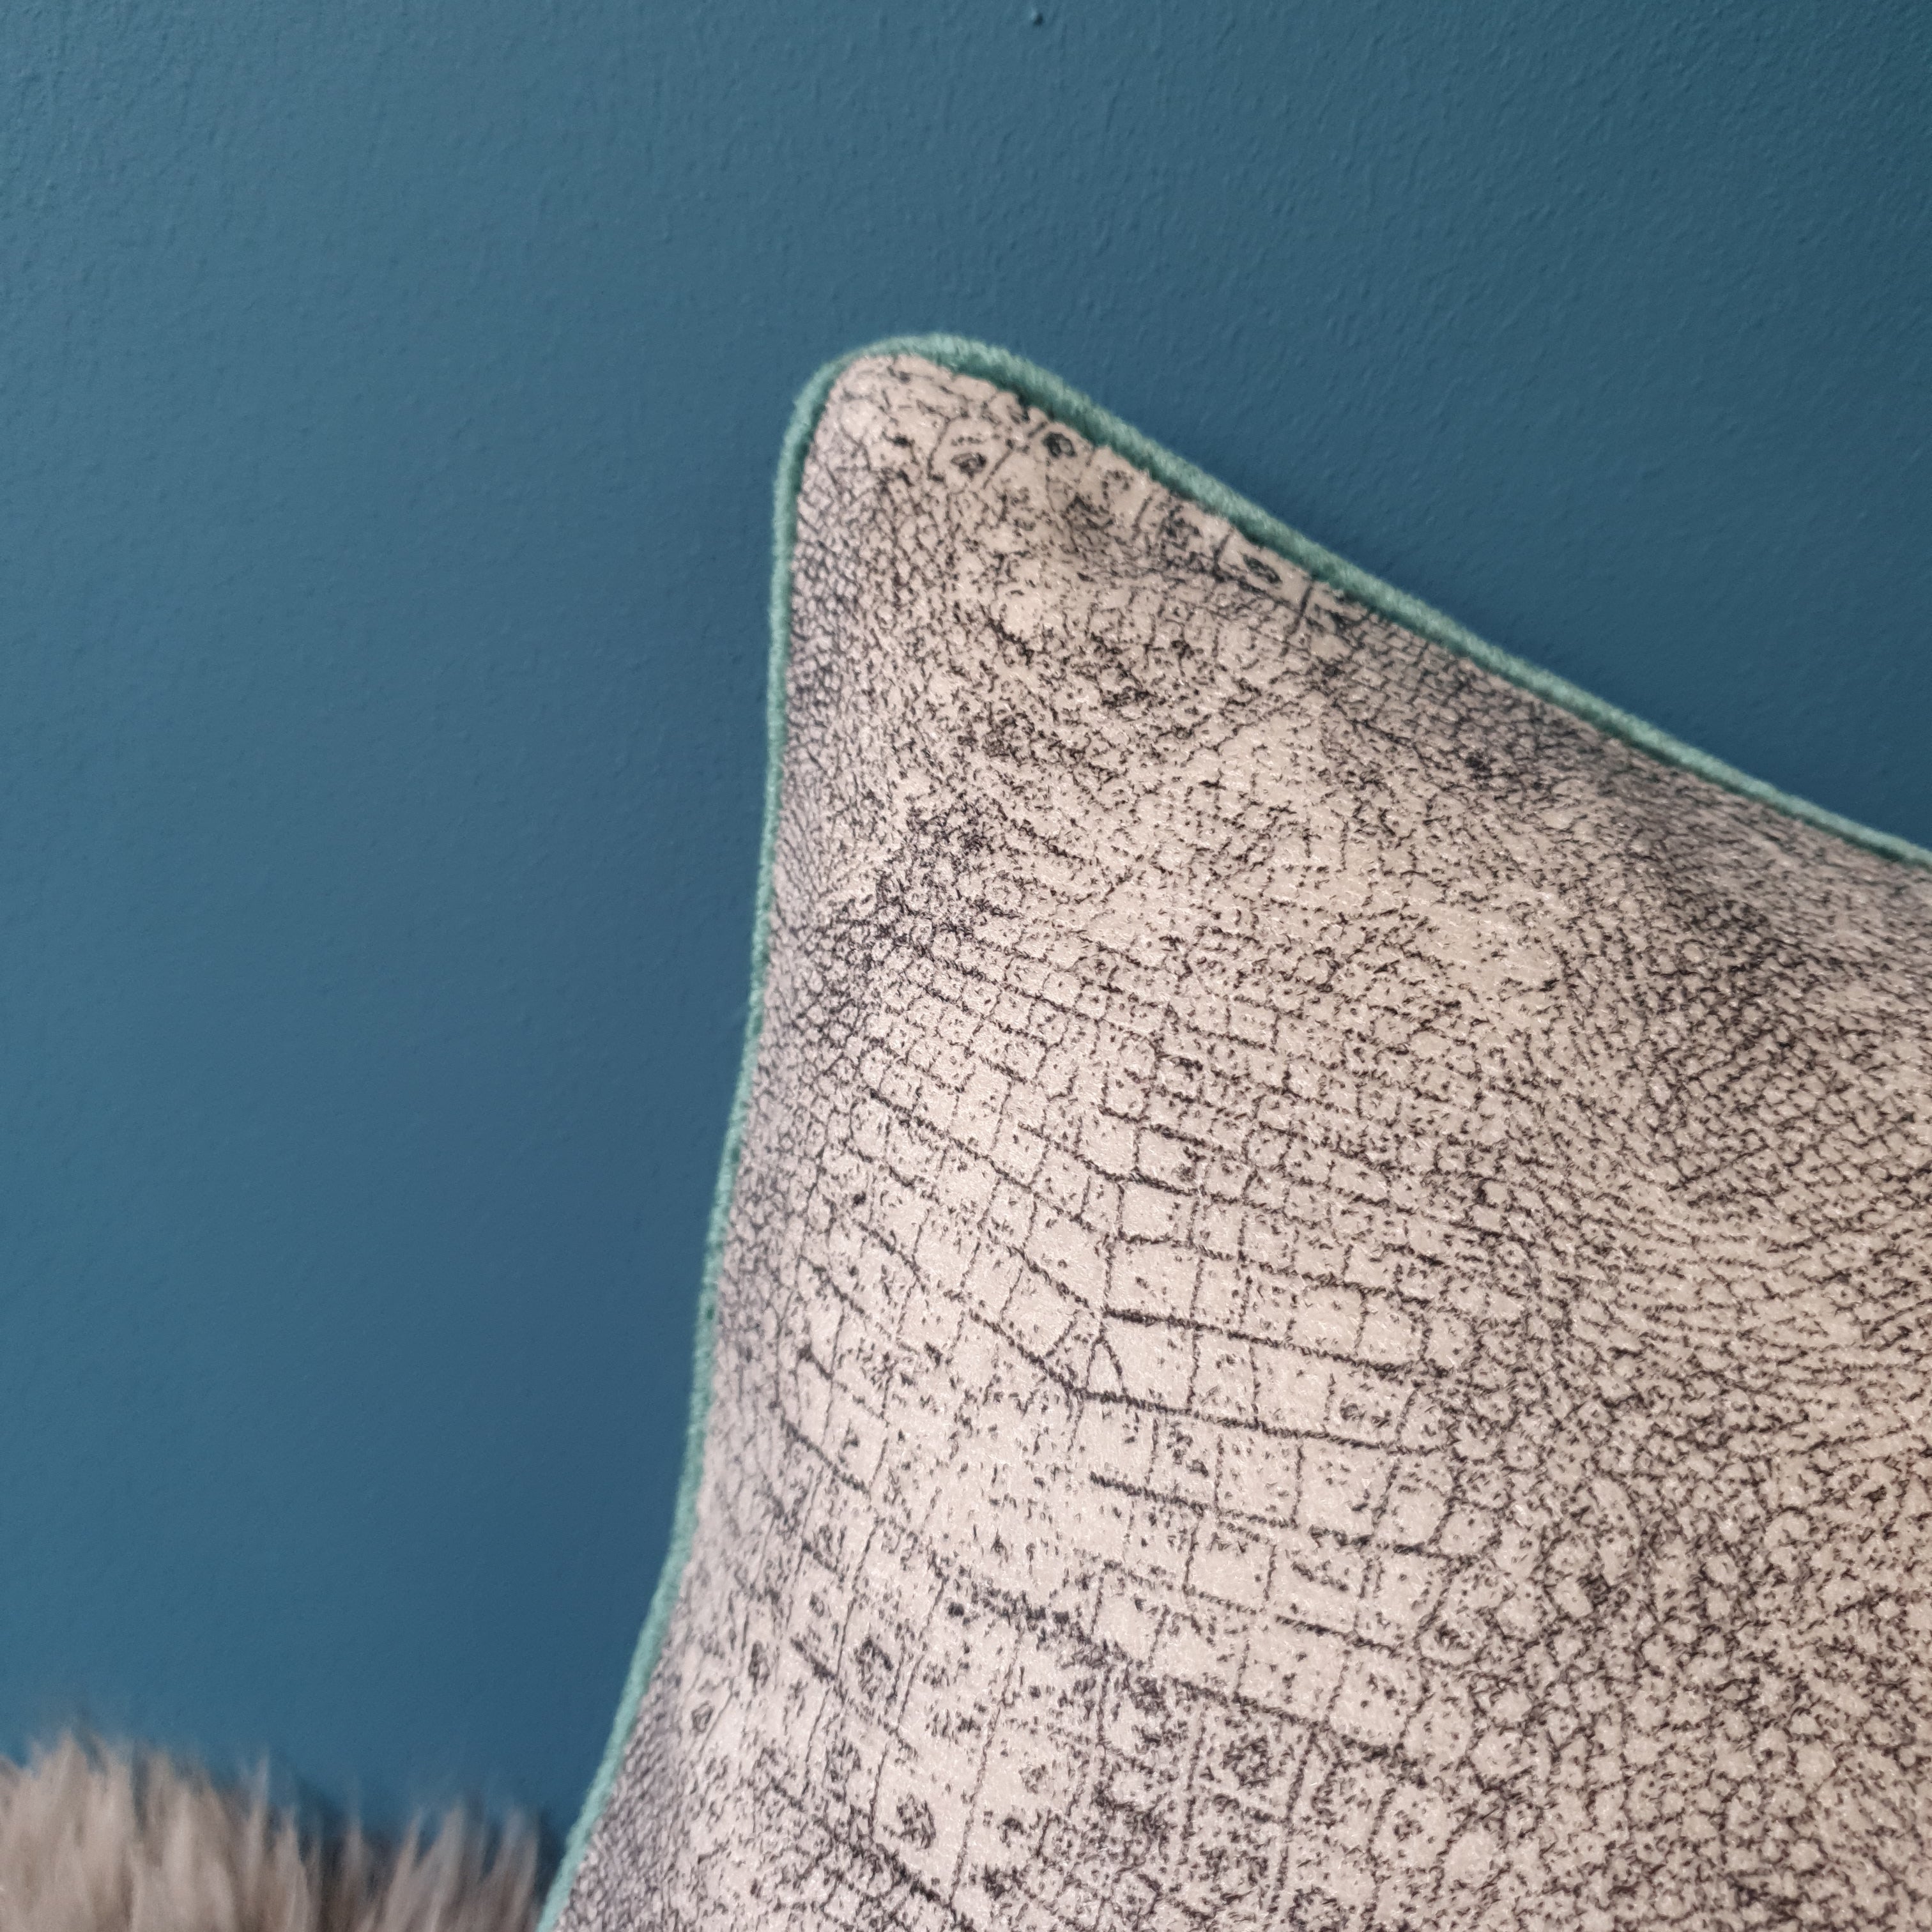 Abstract animal print velvet cushion with seafoam velvet piping